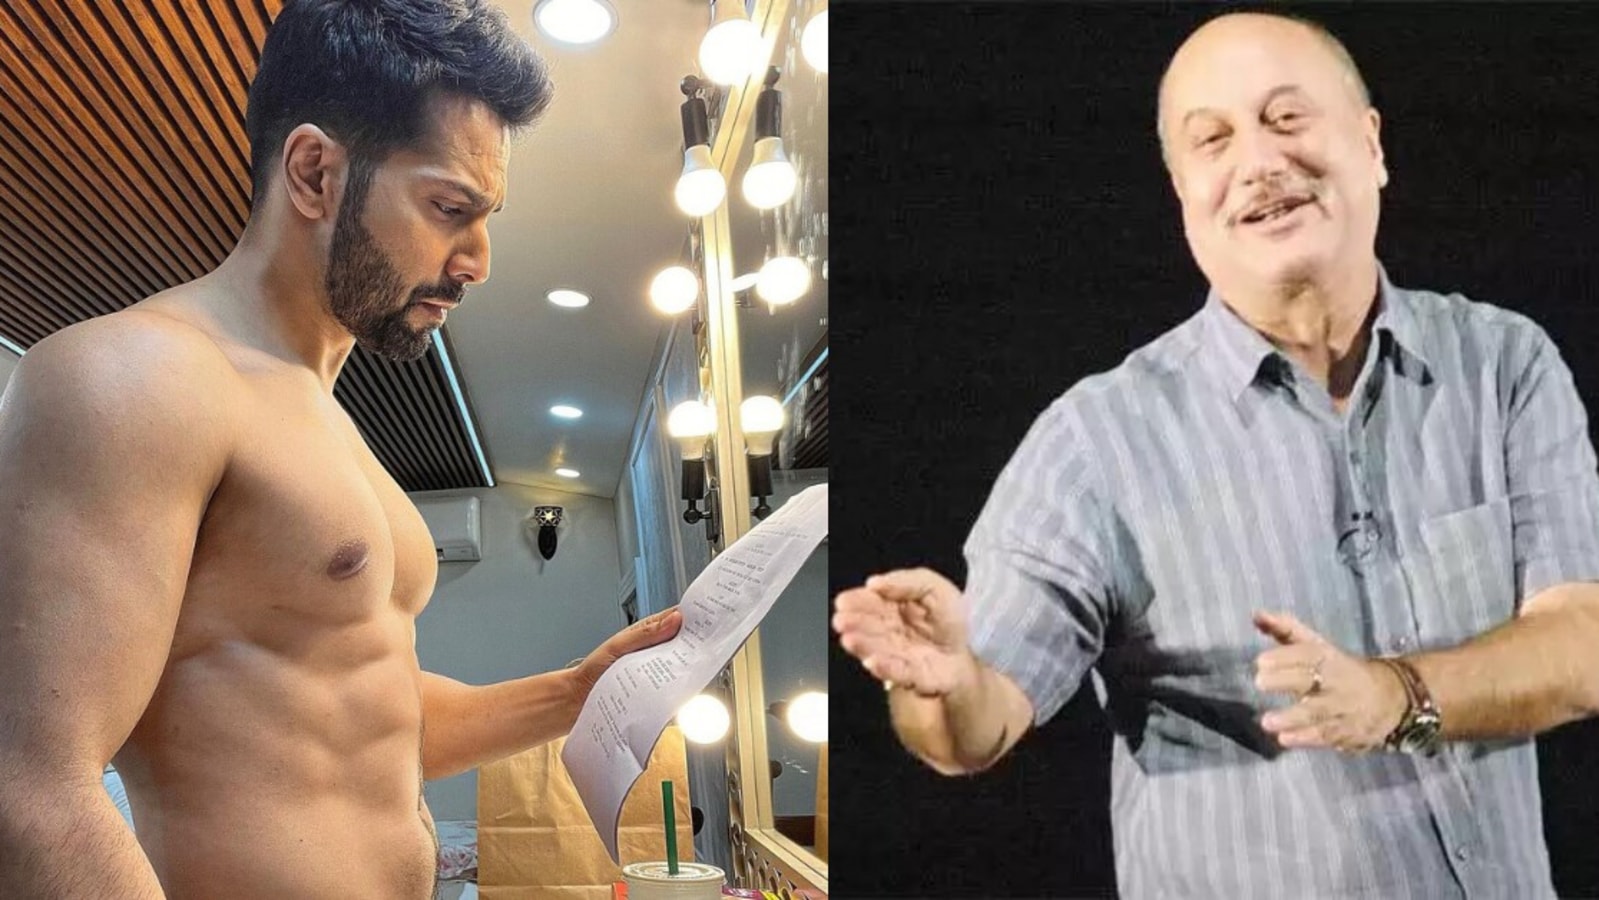 Varun Dhavan Sexy Vedio Of Sex - Varun Dhawan goes shirtless in new pic, Ranveer, Anupam leave hilarious  comments | Bollywood - Hindustan Times